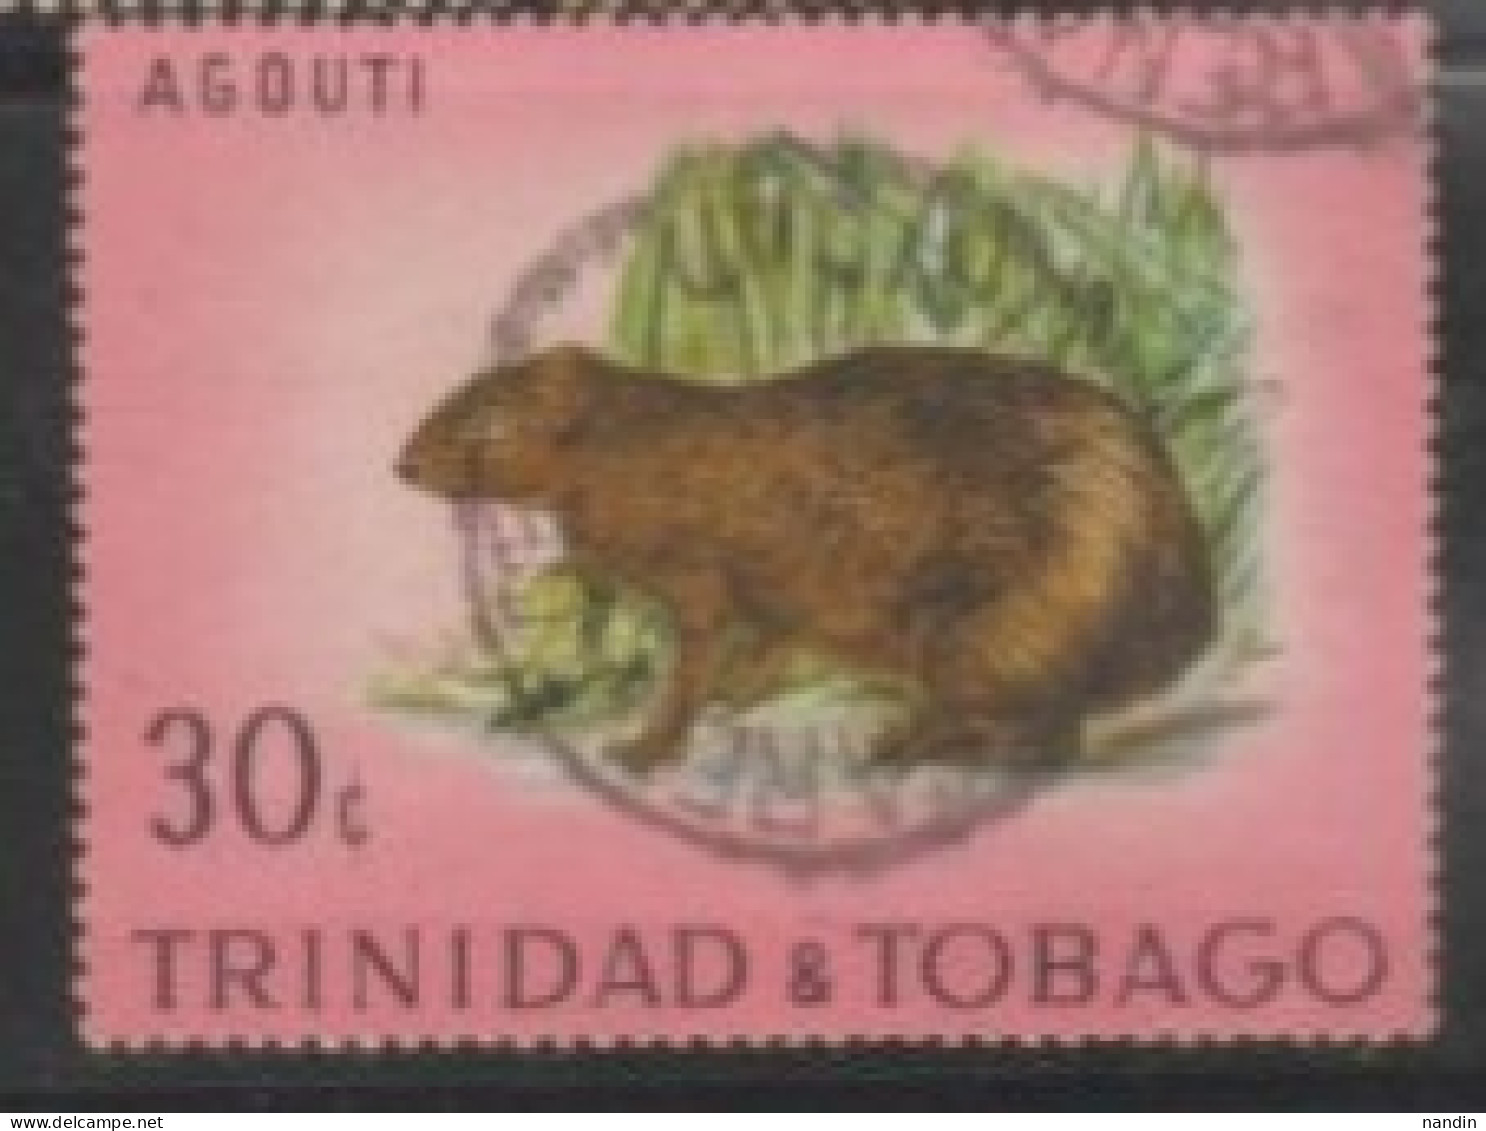 1971TRINIDAD & TOBAGO  STAMP (USED) On WILDLIFE/Dasyprocta Aguti. - Rodents